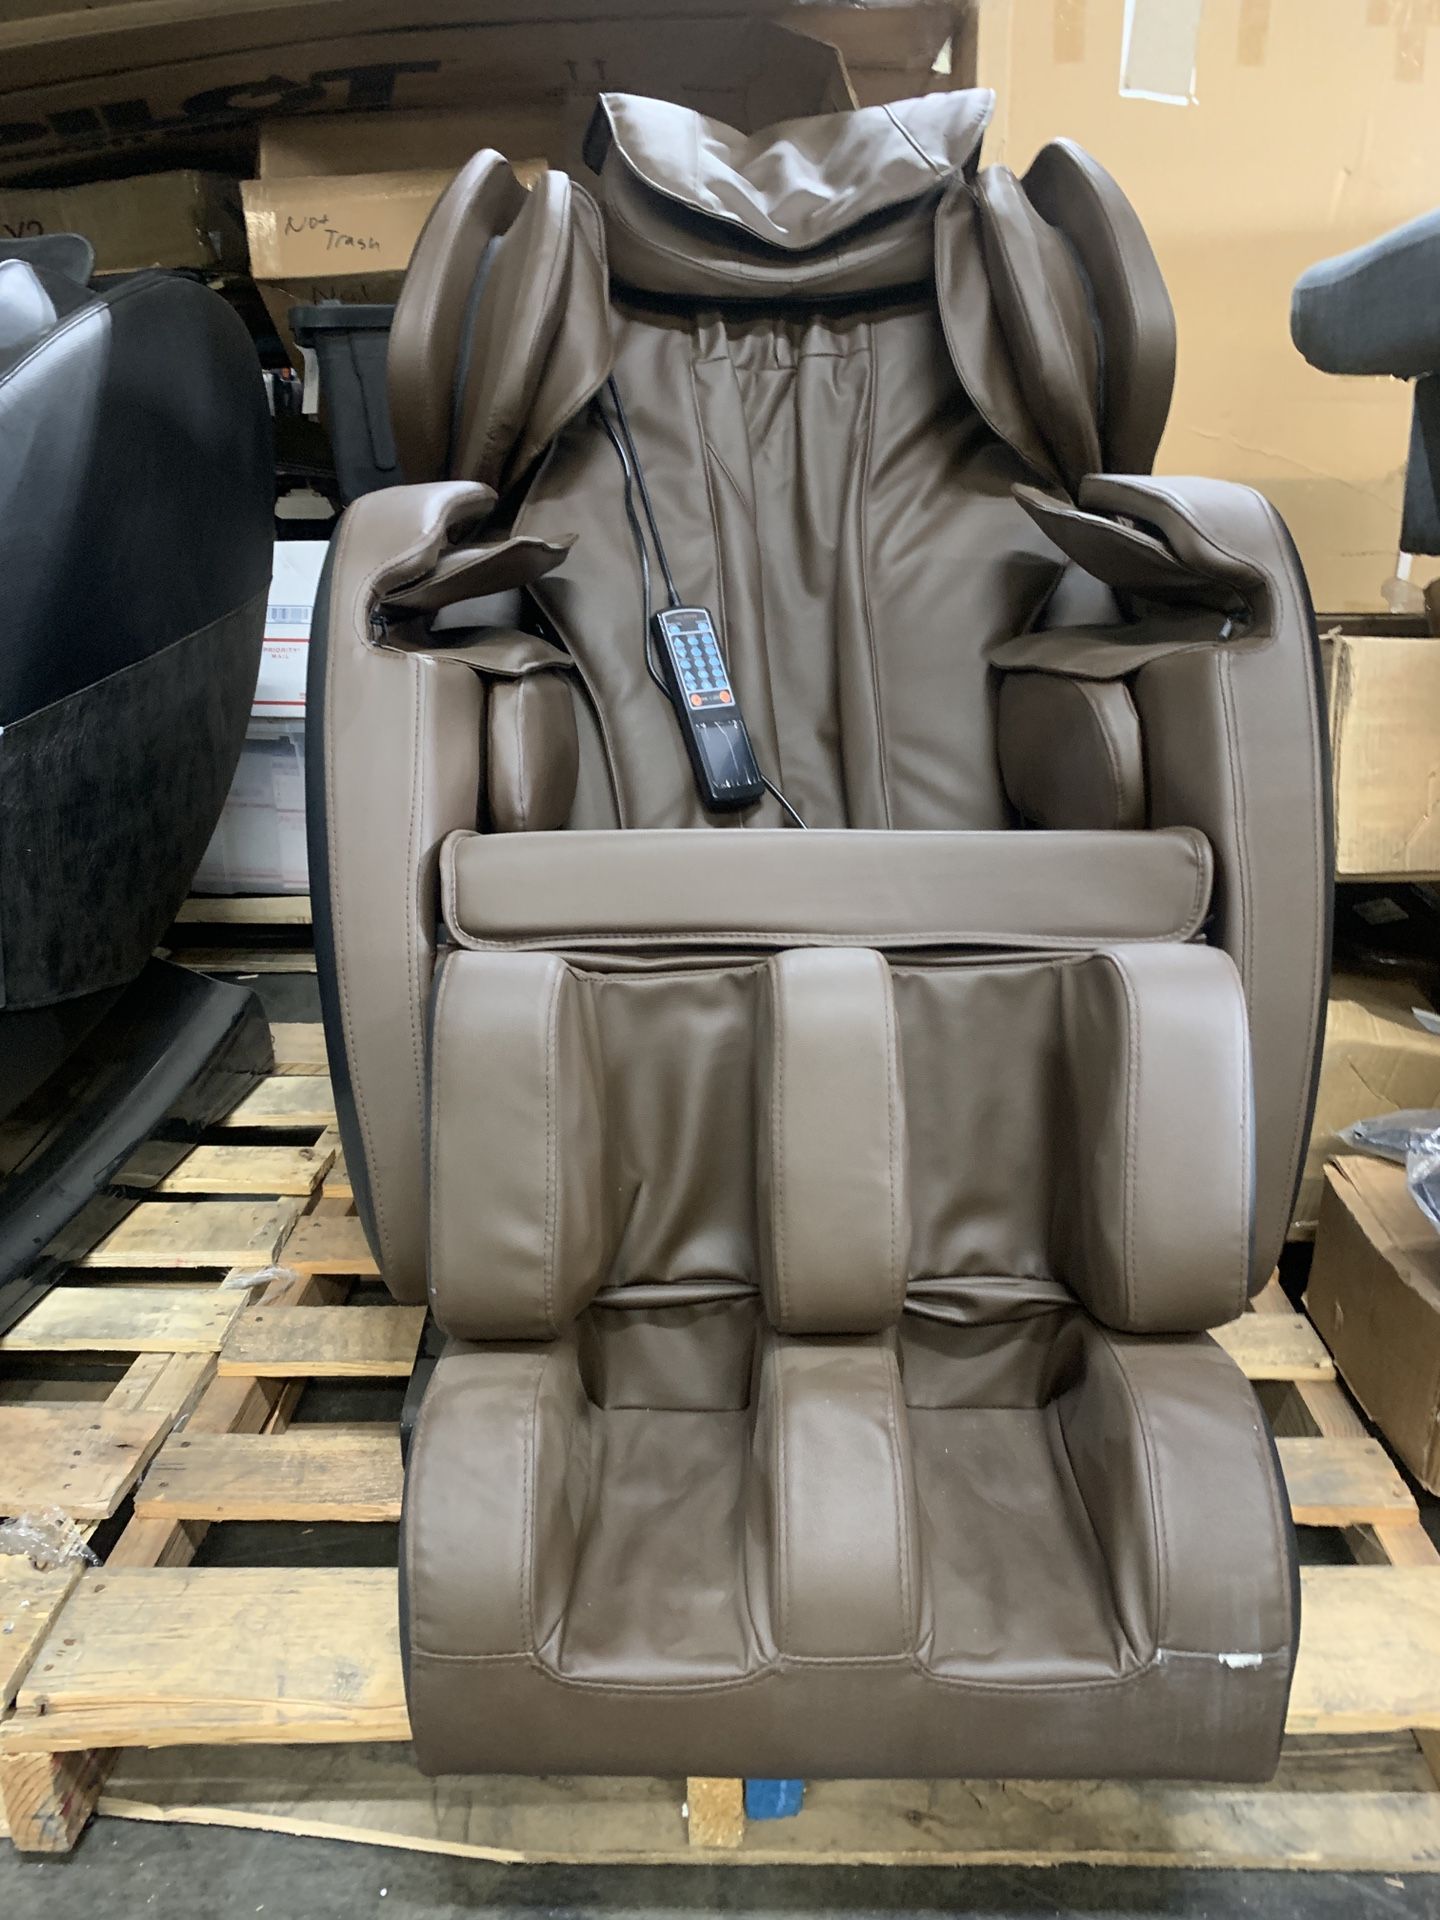 Zero gravity massage chair with full body shiatsu, vibration, heat, and foot roller.